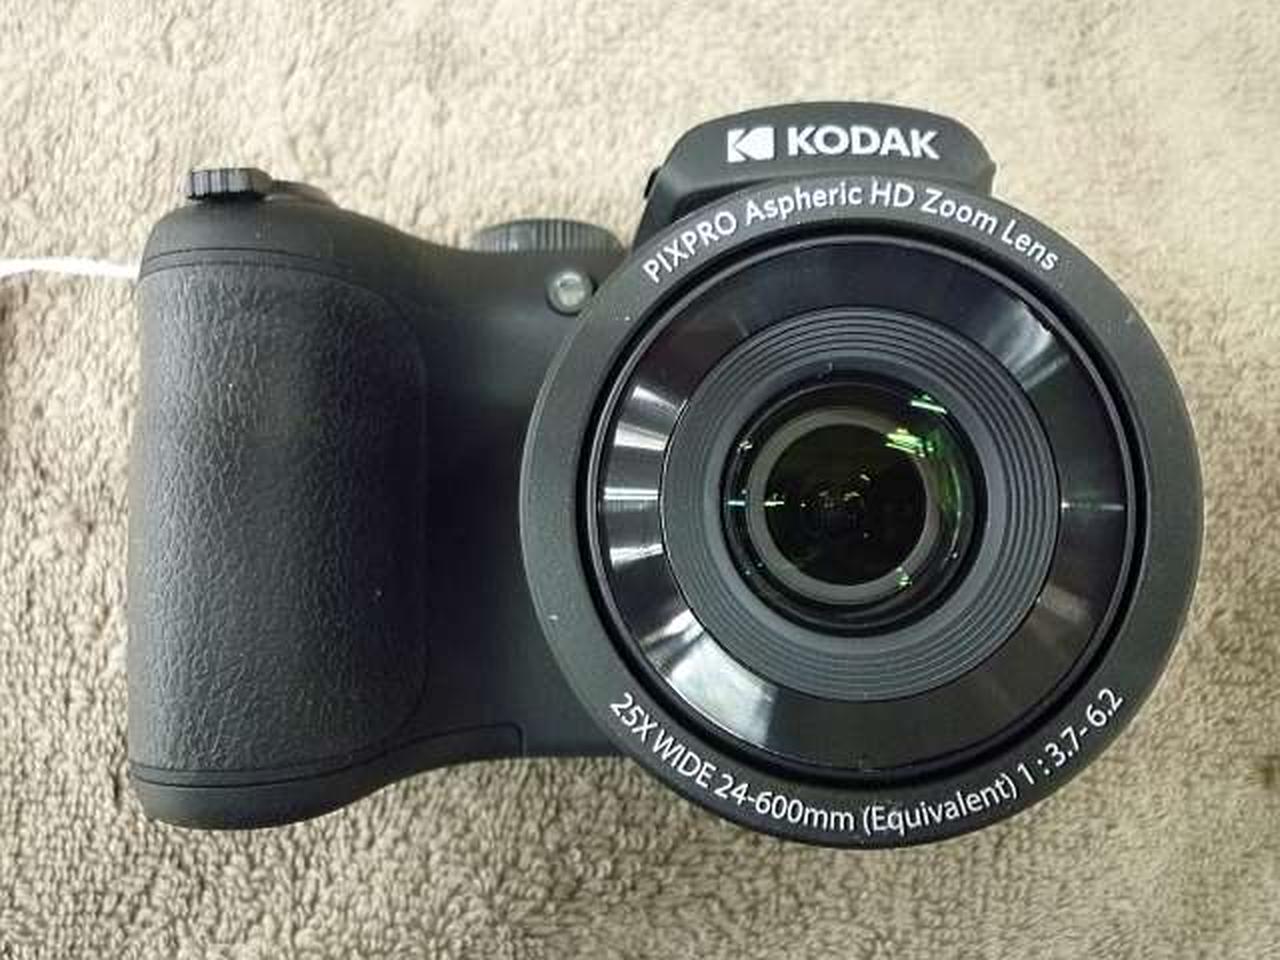 Kodak Compact Digital Camera Model number: AZ255 Used in Japan